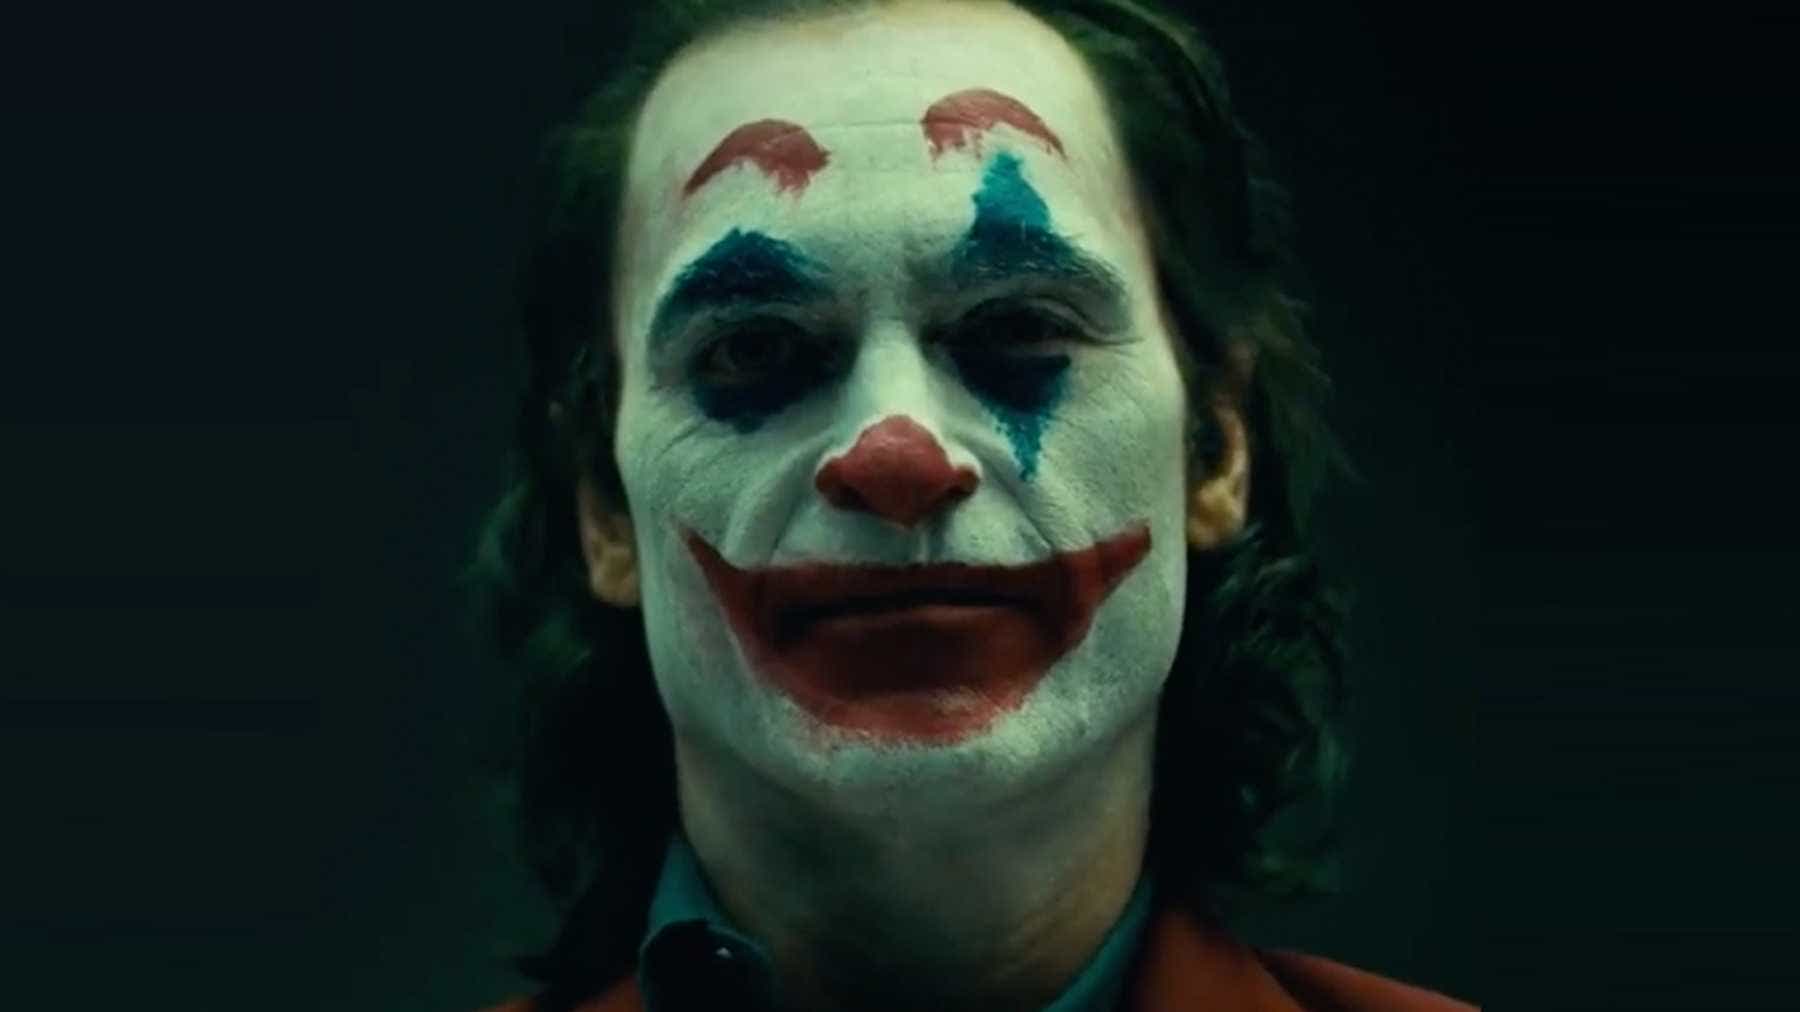   Joker   movie moves Aurora shooting survivors to pen 